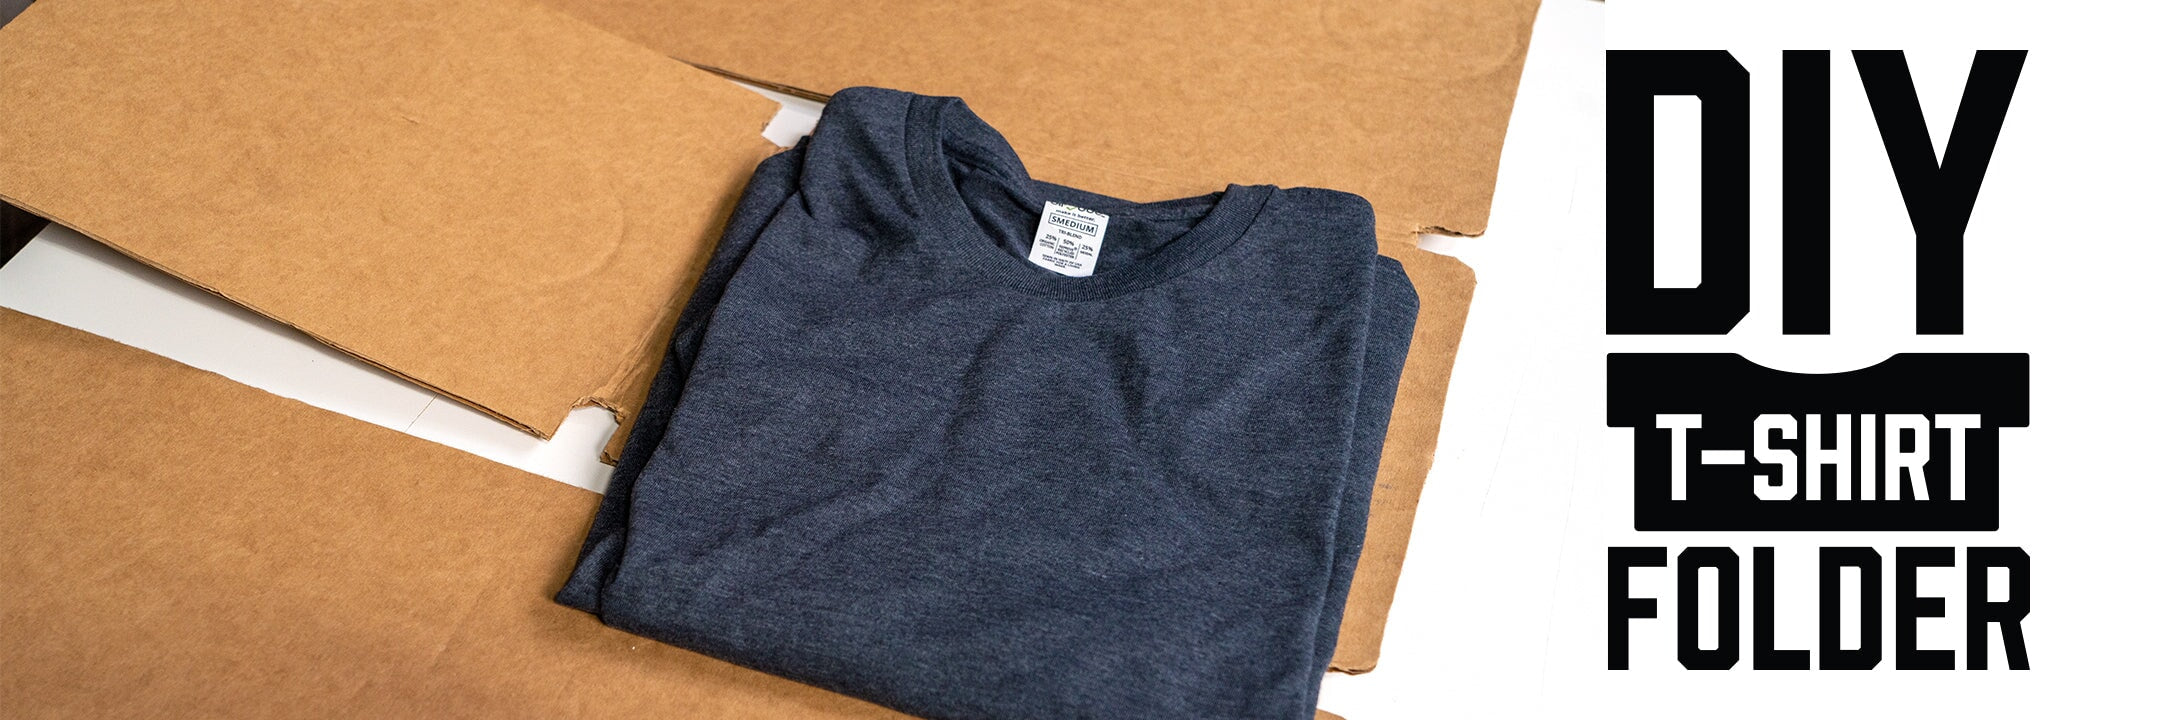 Resultado de imagen de doblar ropa  Shirt folder, T shirt folding, Shirt  folding